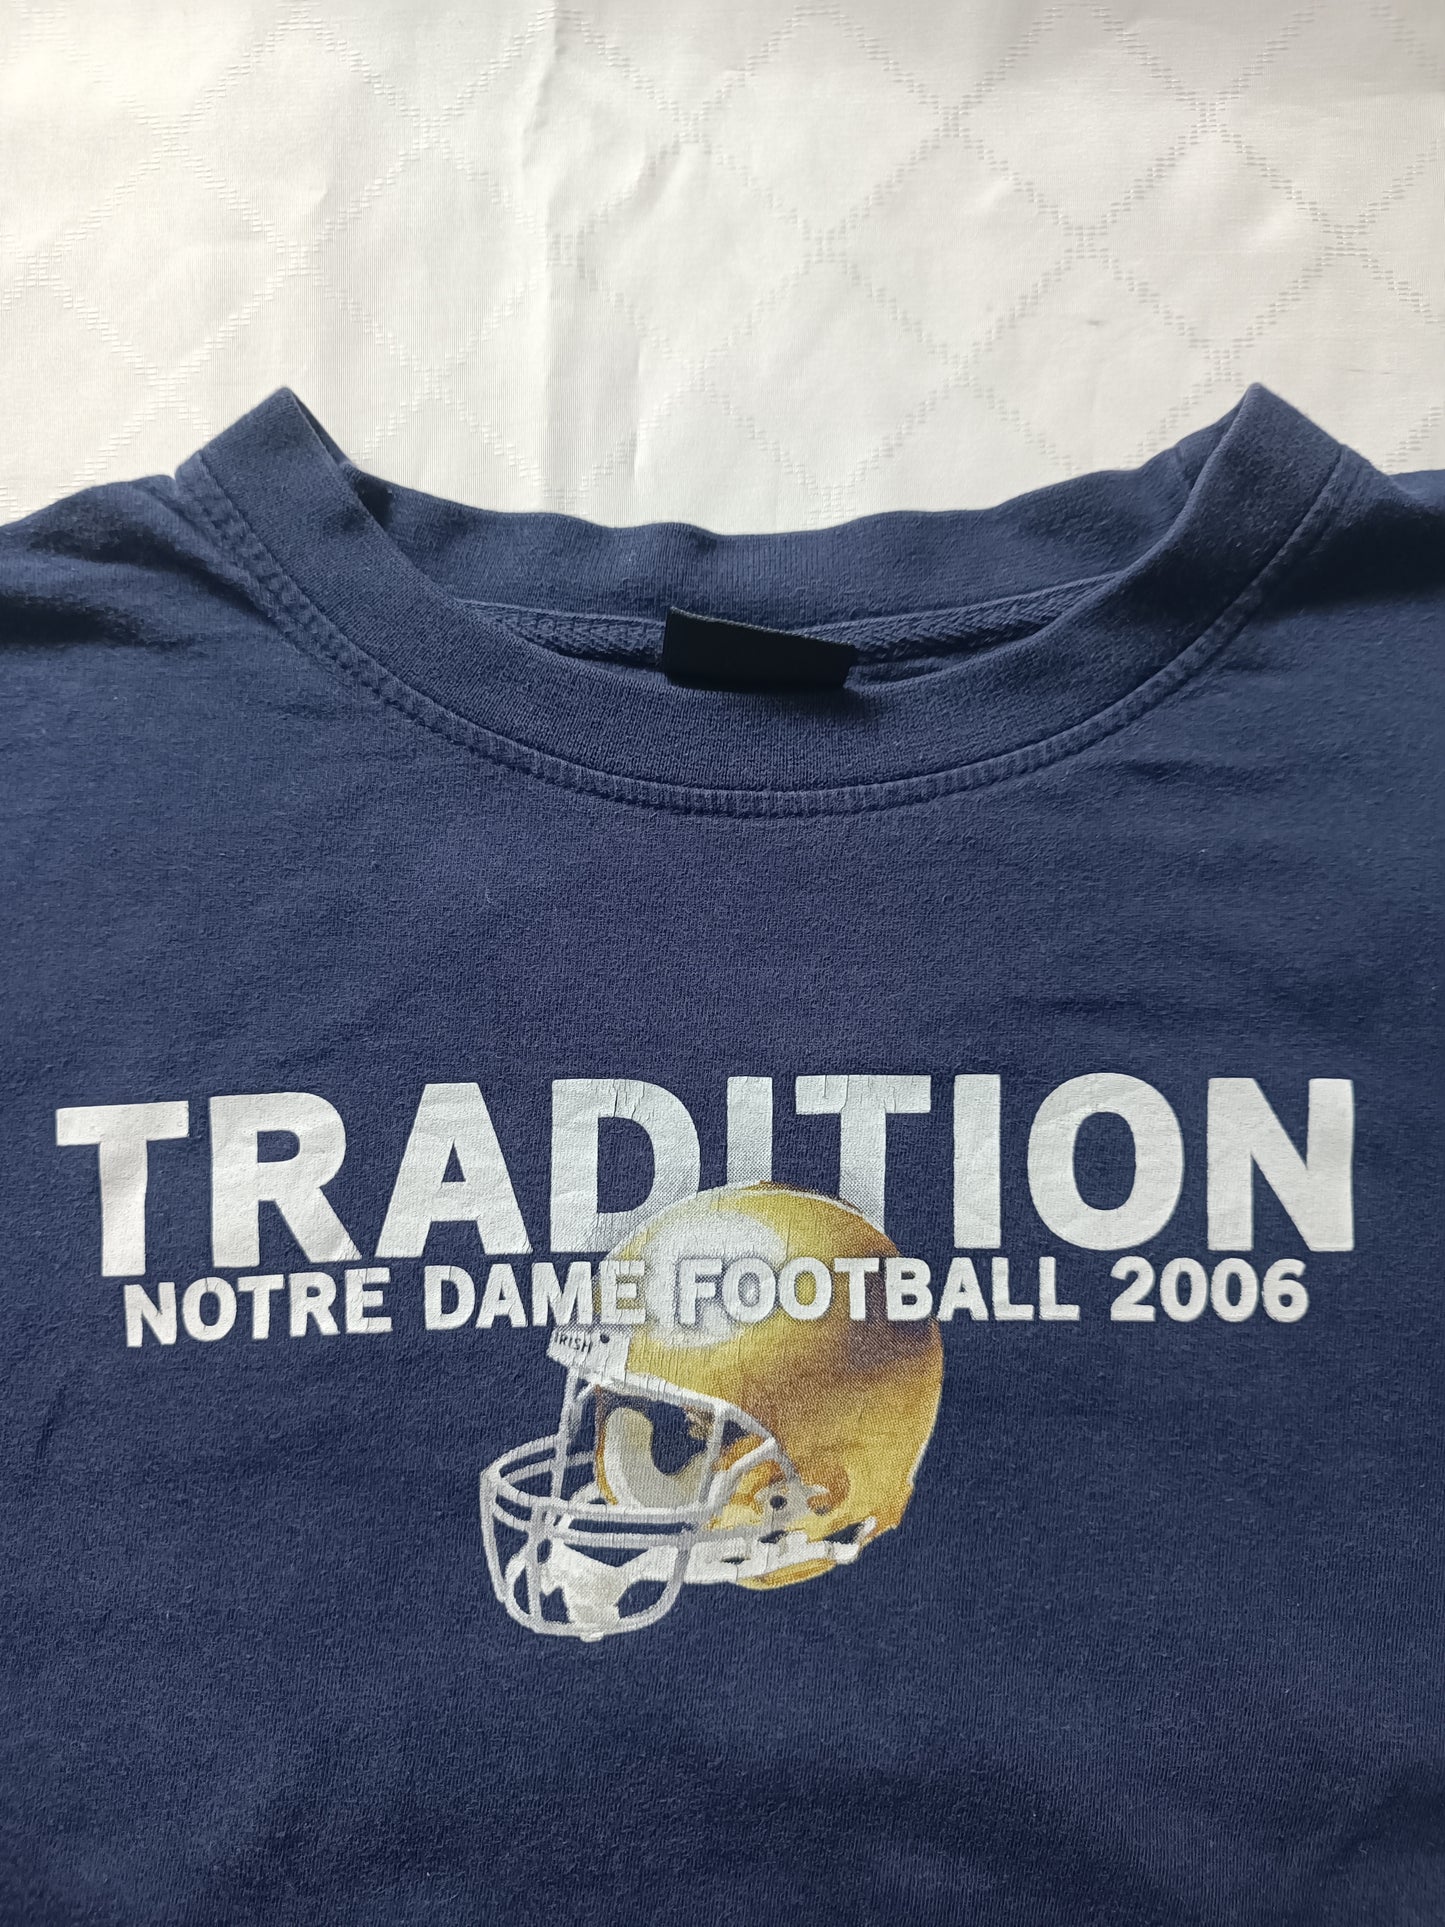 Notre Dame Football - XL